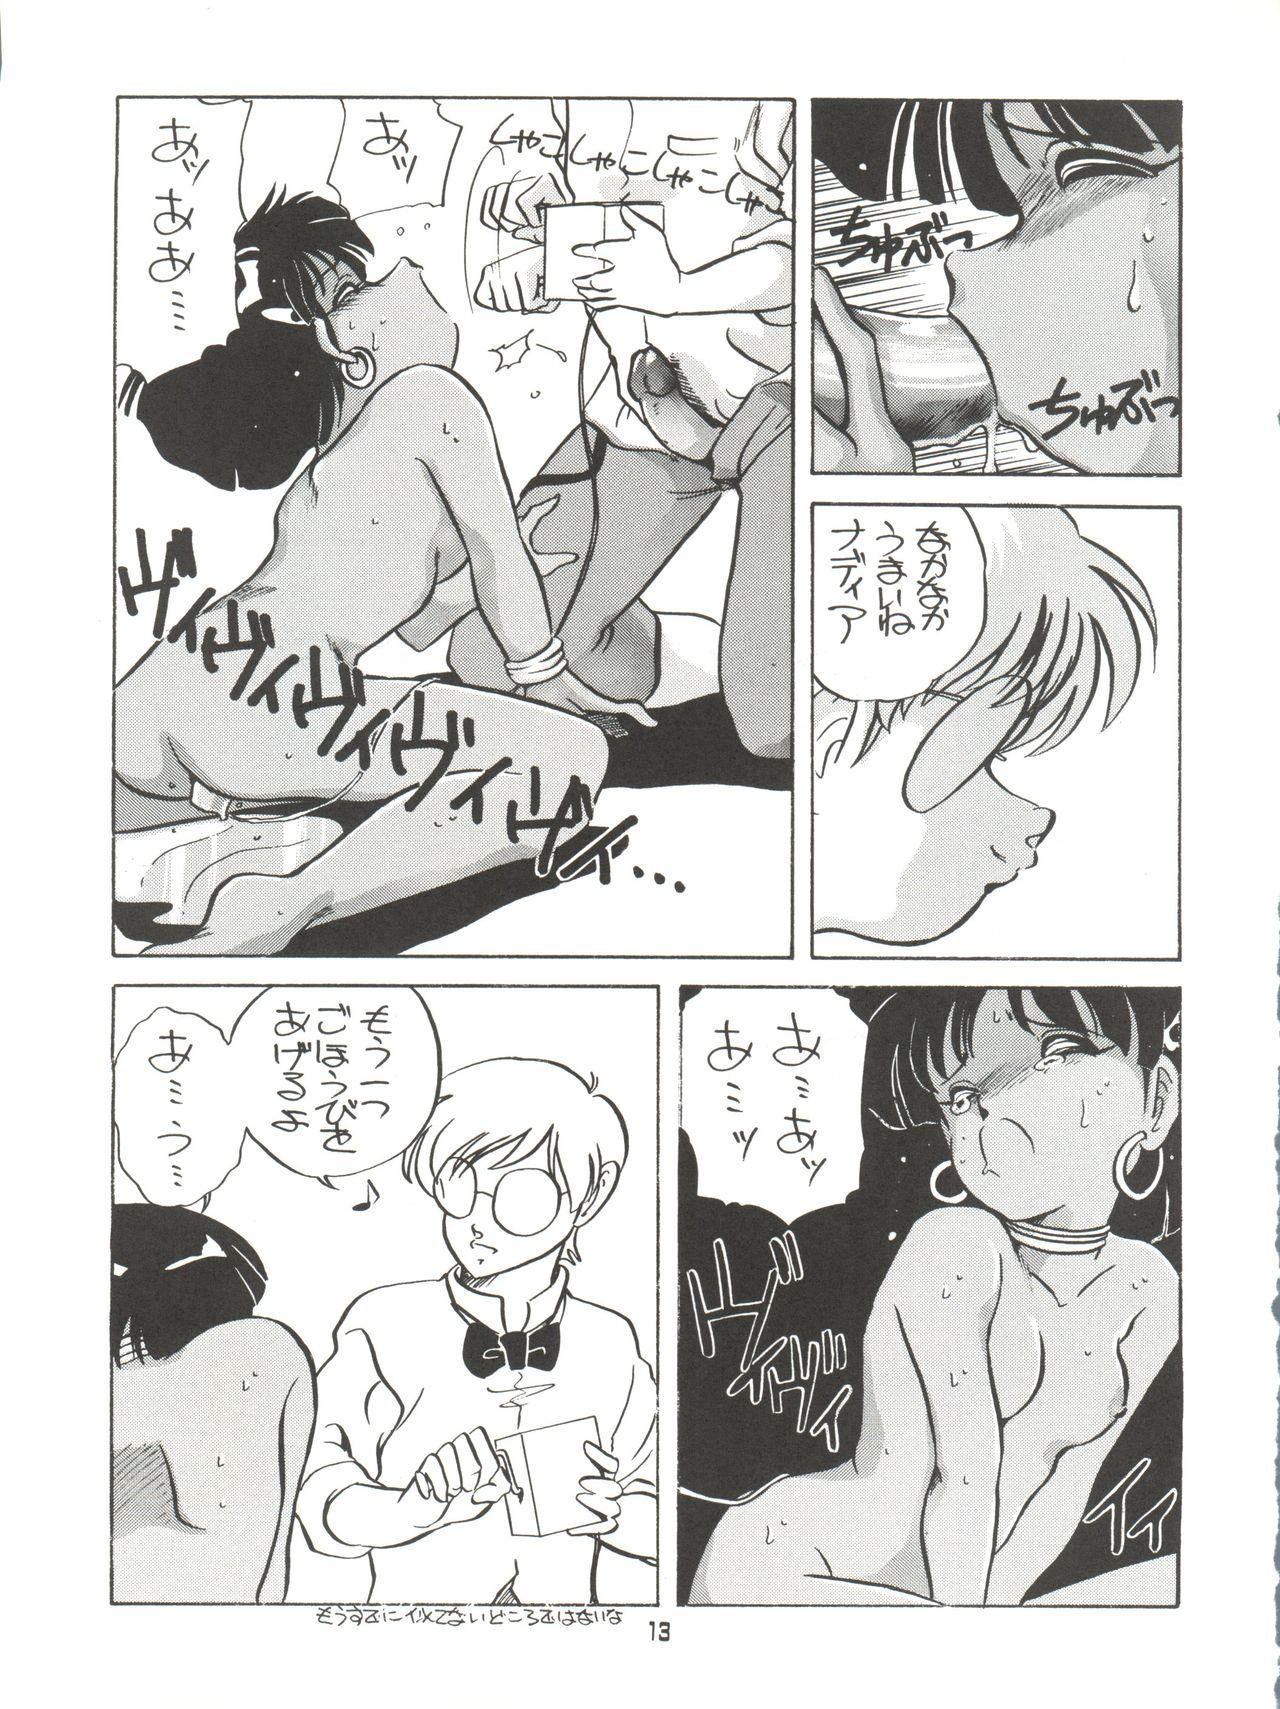 With AMAMORI - Fushigi no umi no nadia Foreskin - Page 13